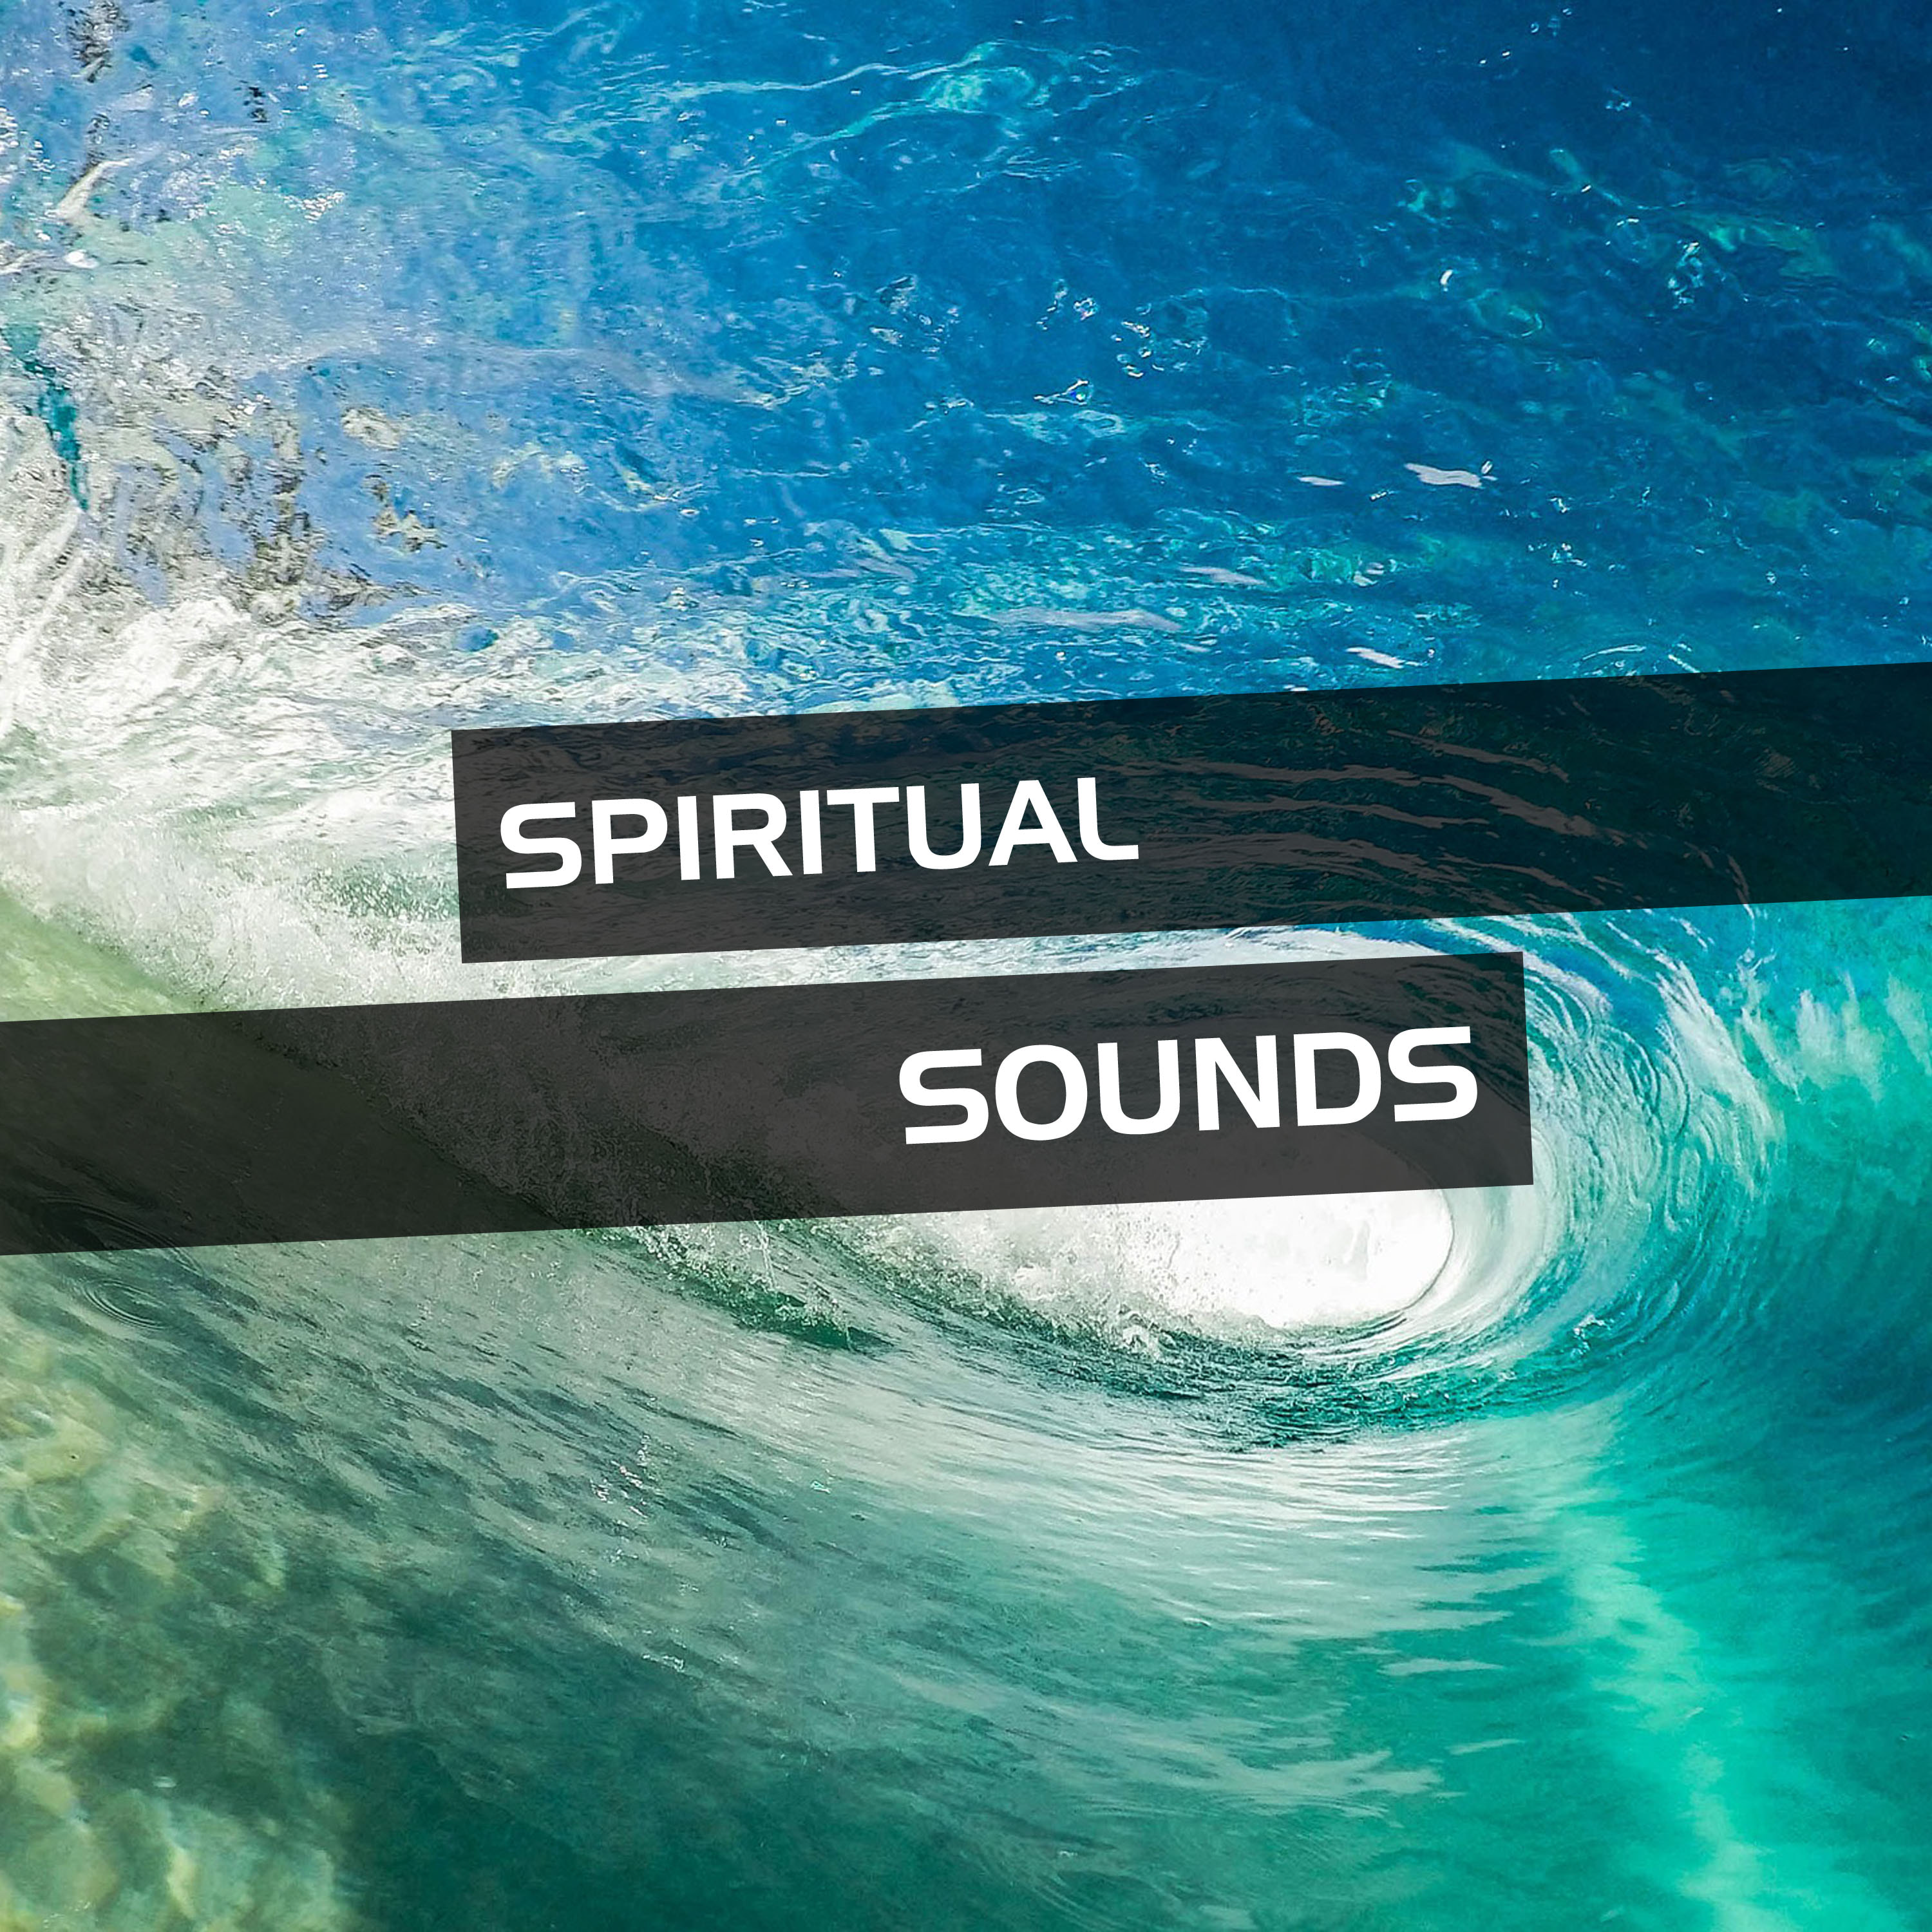 Spiritual Sounds from the Buddha Bar